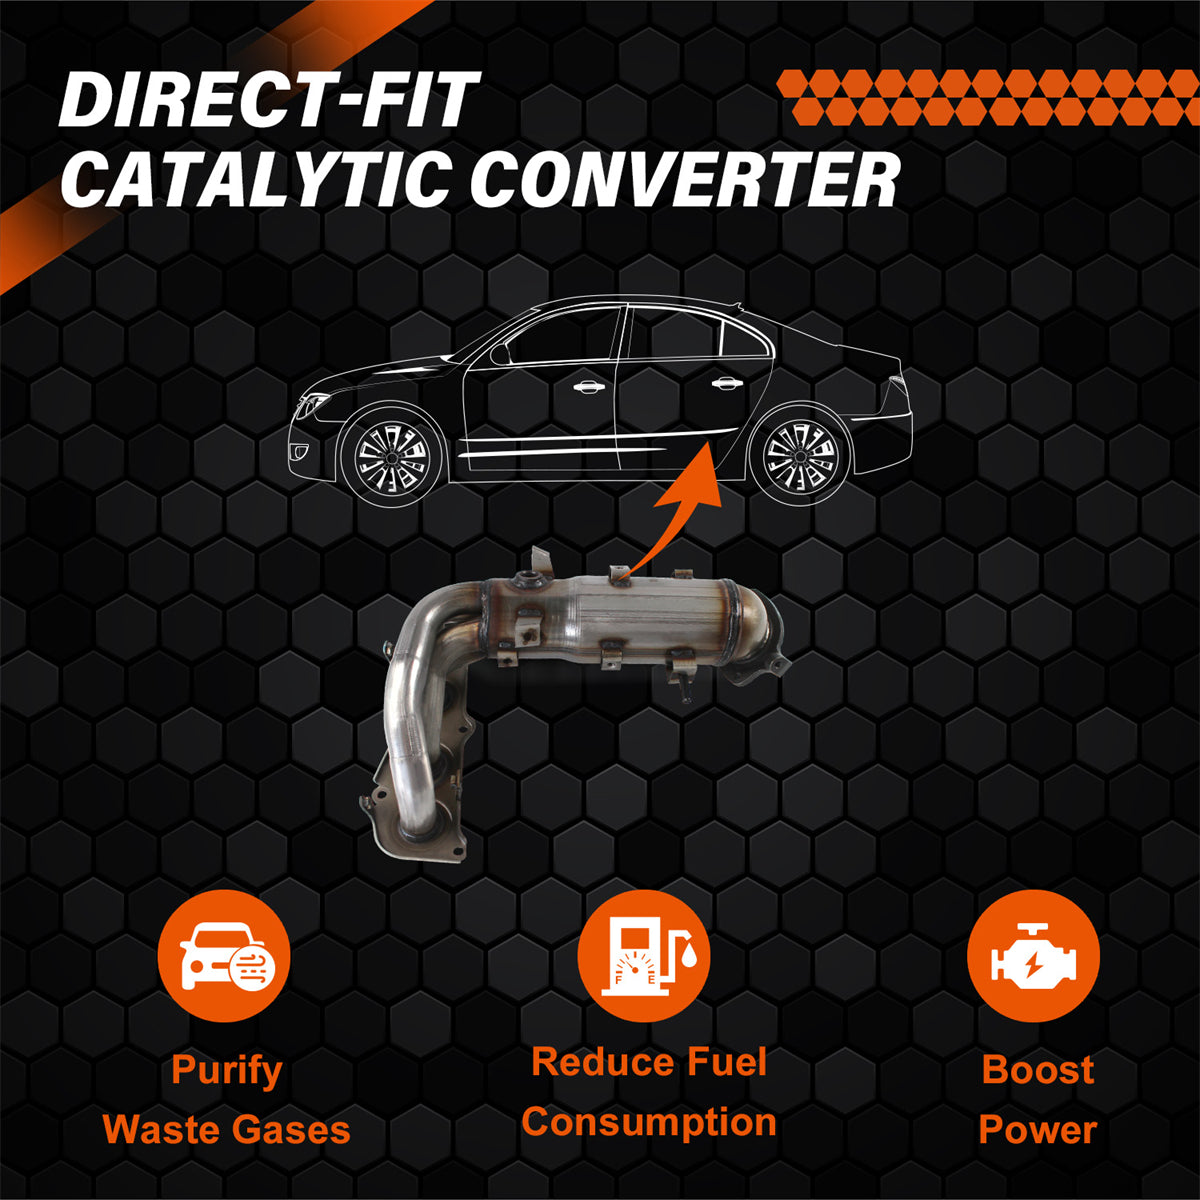 Manifold Catalytic Converter 674-811, Manifold Catalytic Converter for 2002-2016 Toyota Camry, Car Manifold Catalytic Converter